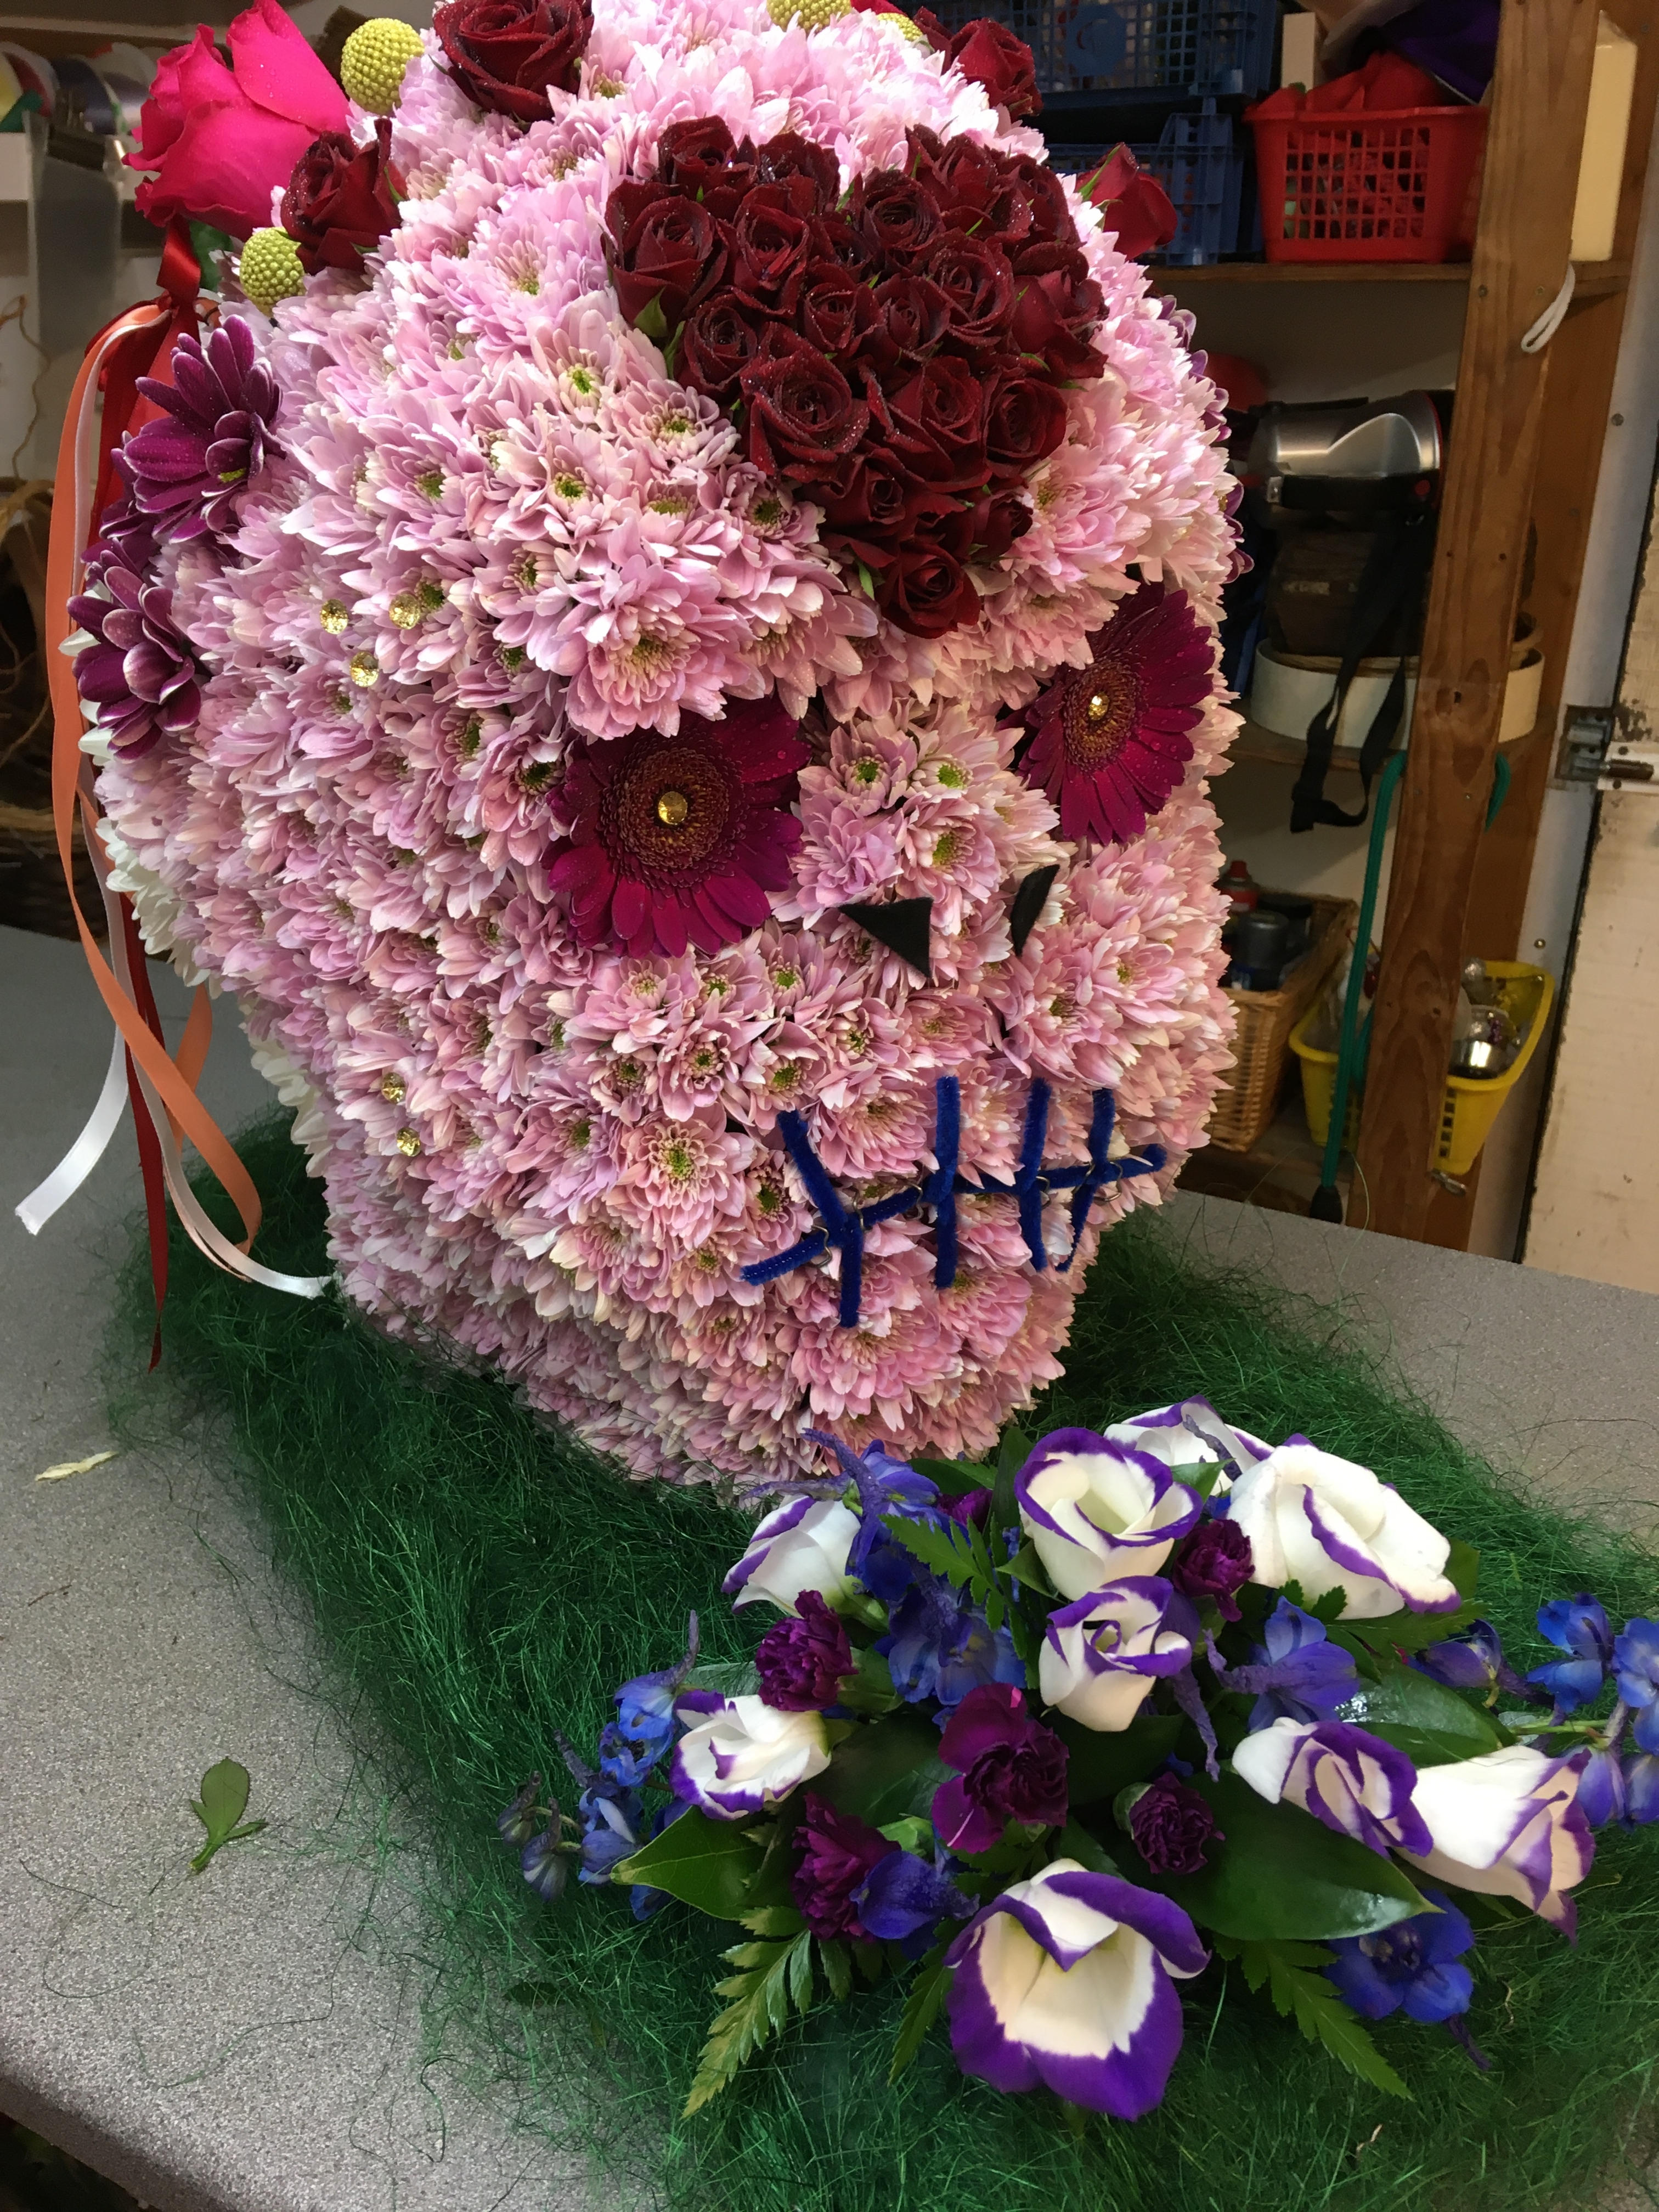 Skull made from flowers